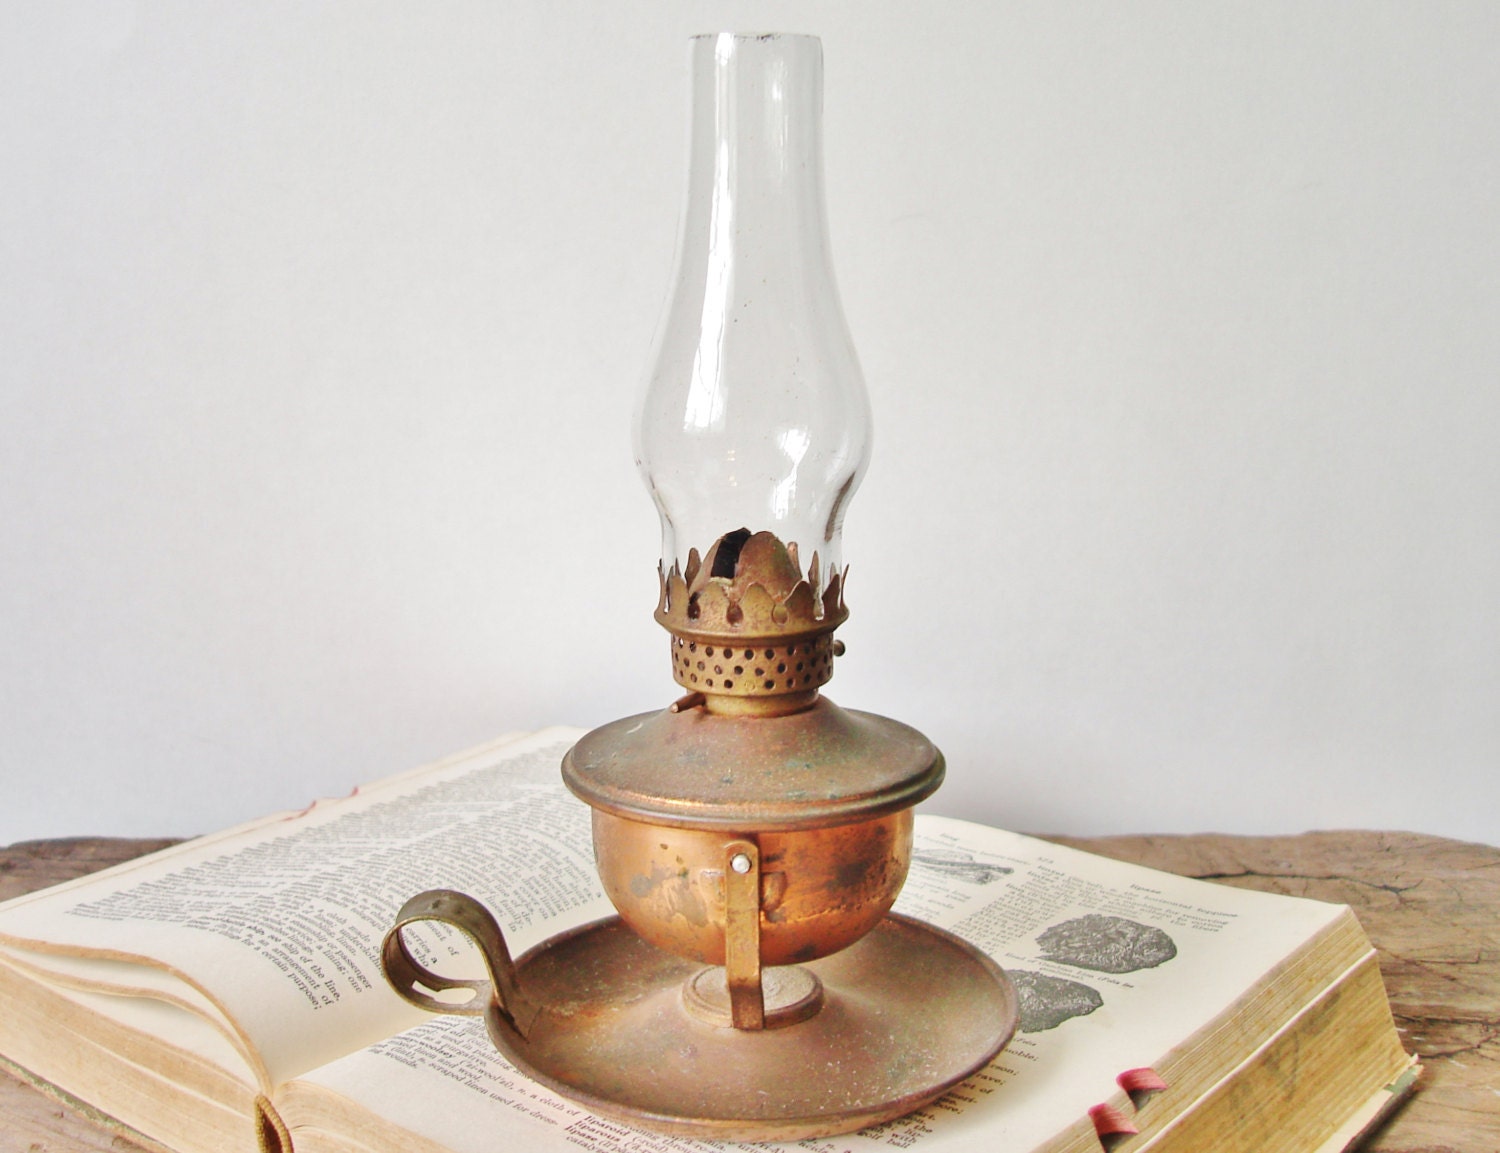 How To Use A Kerosene Lamp